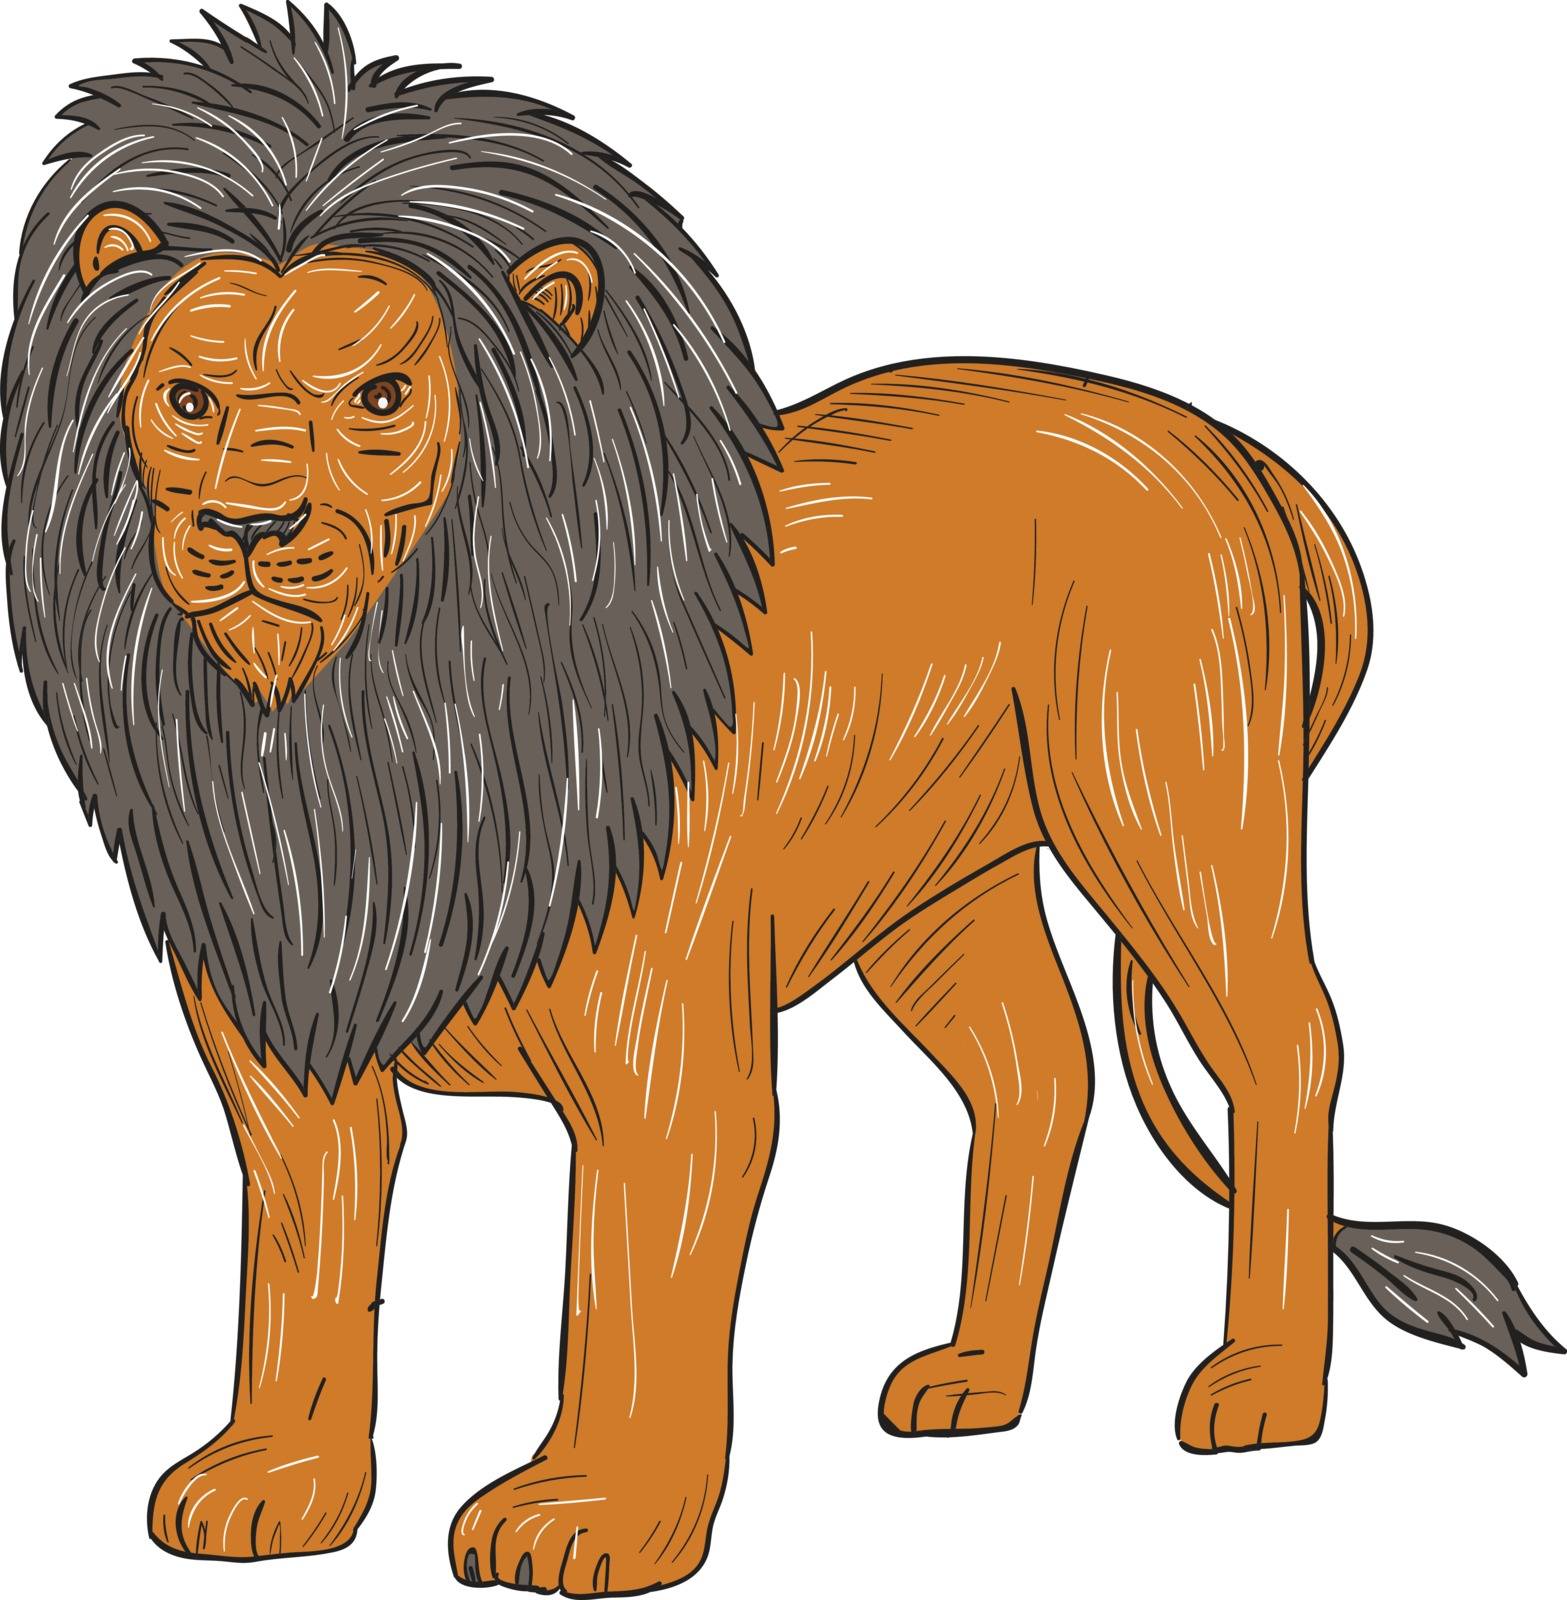 Lion Hunting Surveying Prey Drawing by patrimonio